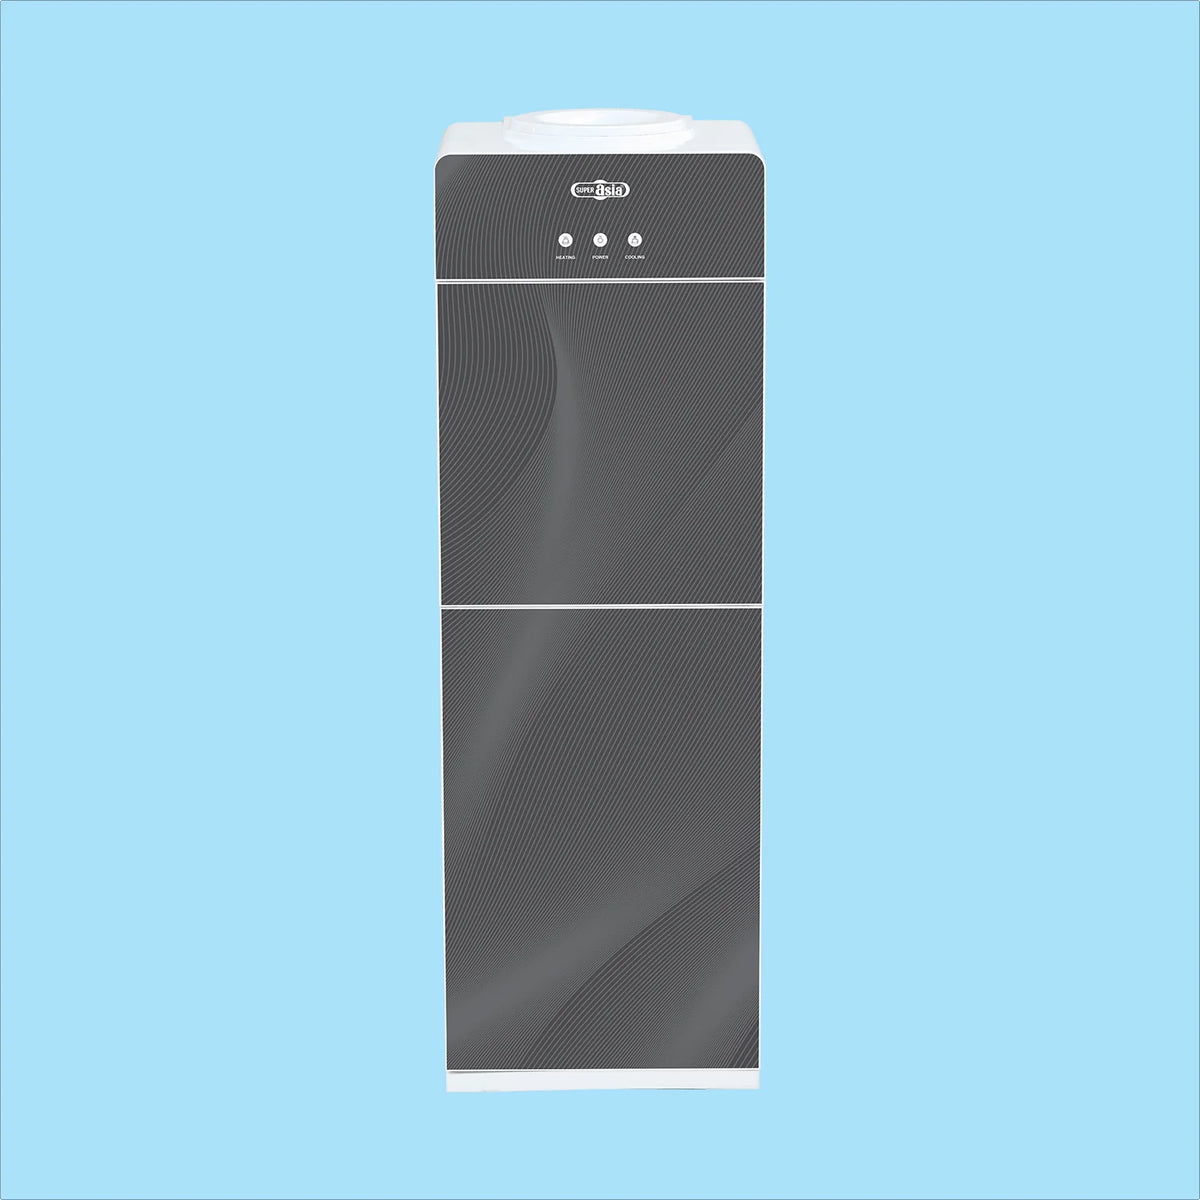 Super Asia Water Dispenser HC-53 G Elegant Tempered Double Glass Door Easy Water Dispensing with 3 Taps Brand Warranty